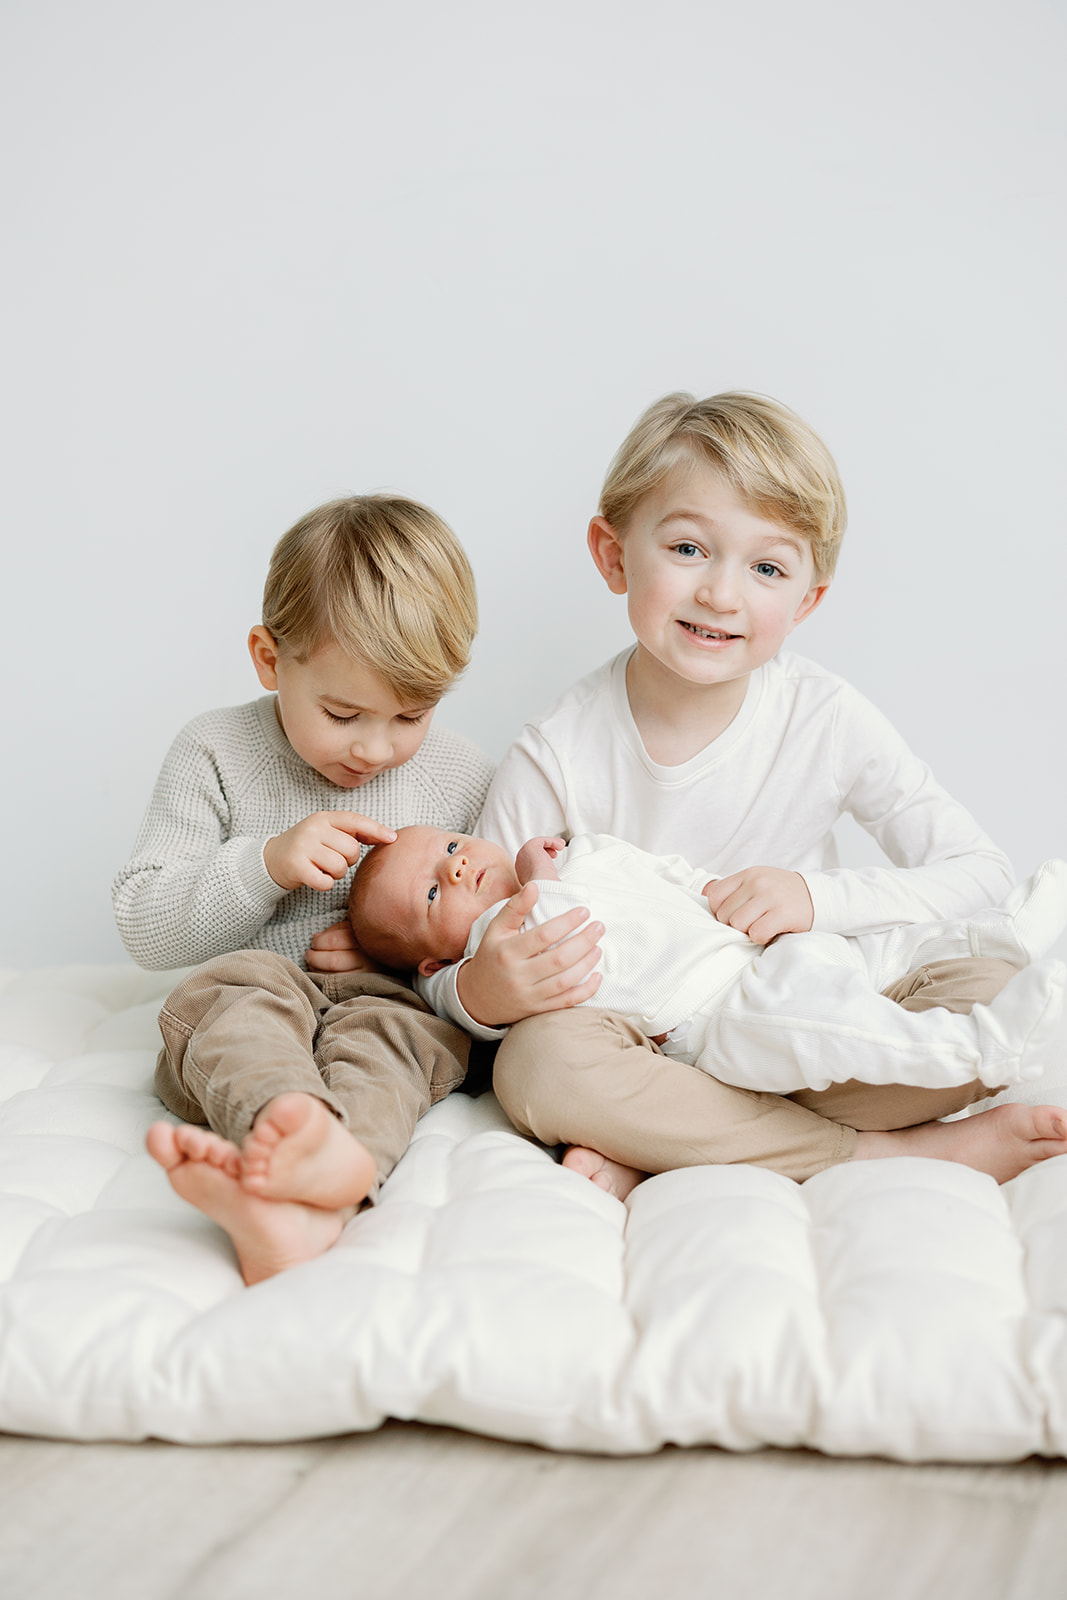 Brothers holding newborn